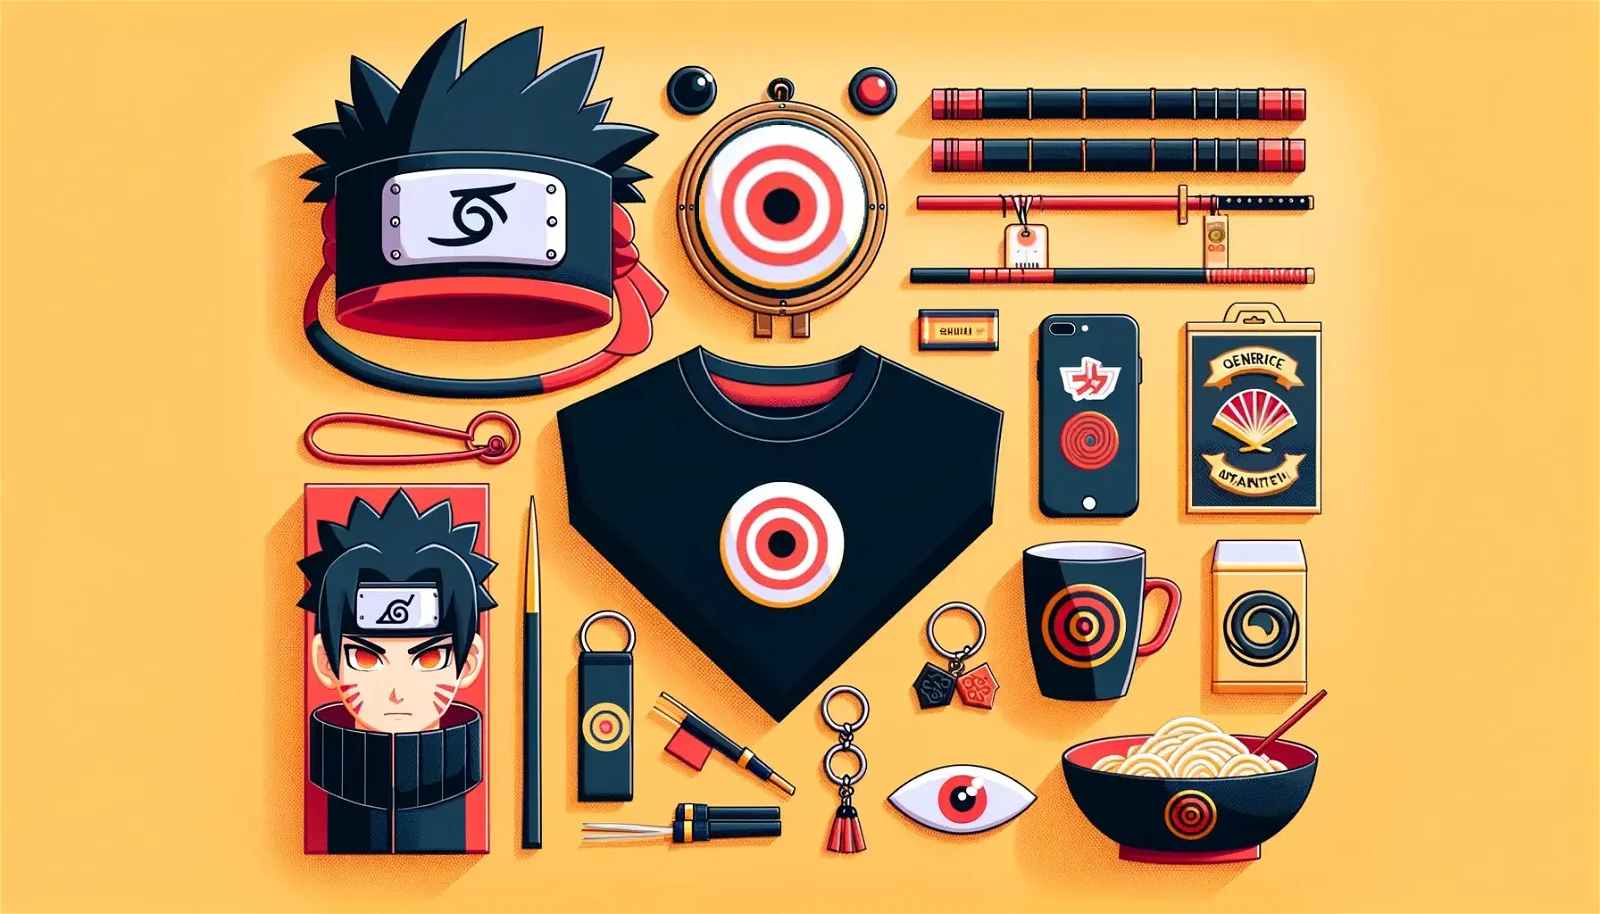 Naruto Puzzle 1000 Pieces  Anime, Diy boy gifts, Japanese cartoon